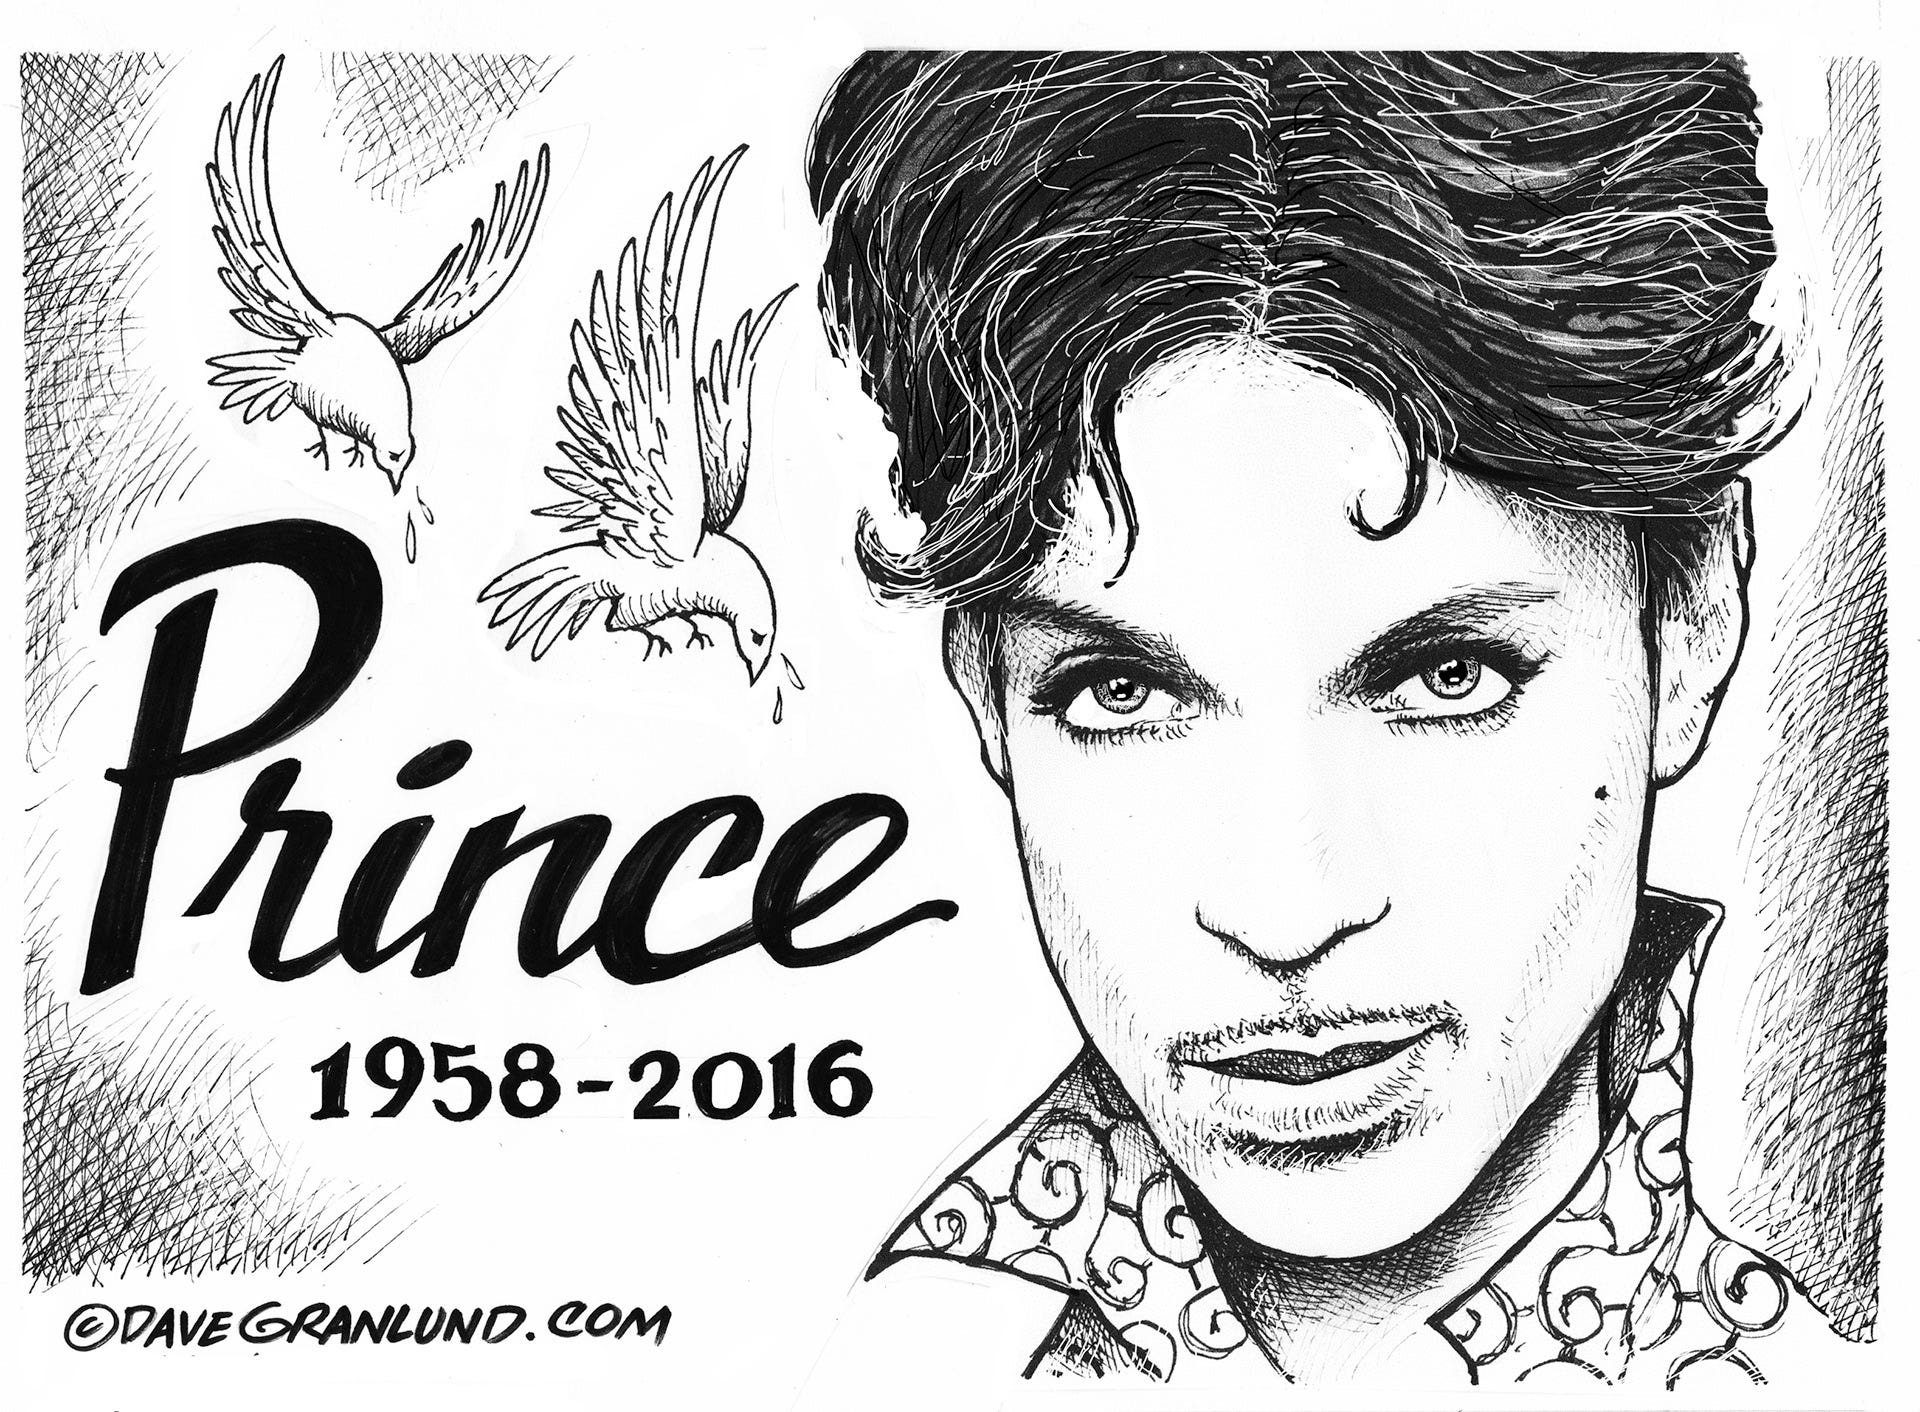 Granlund cartoon: Prince tribute